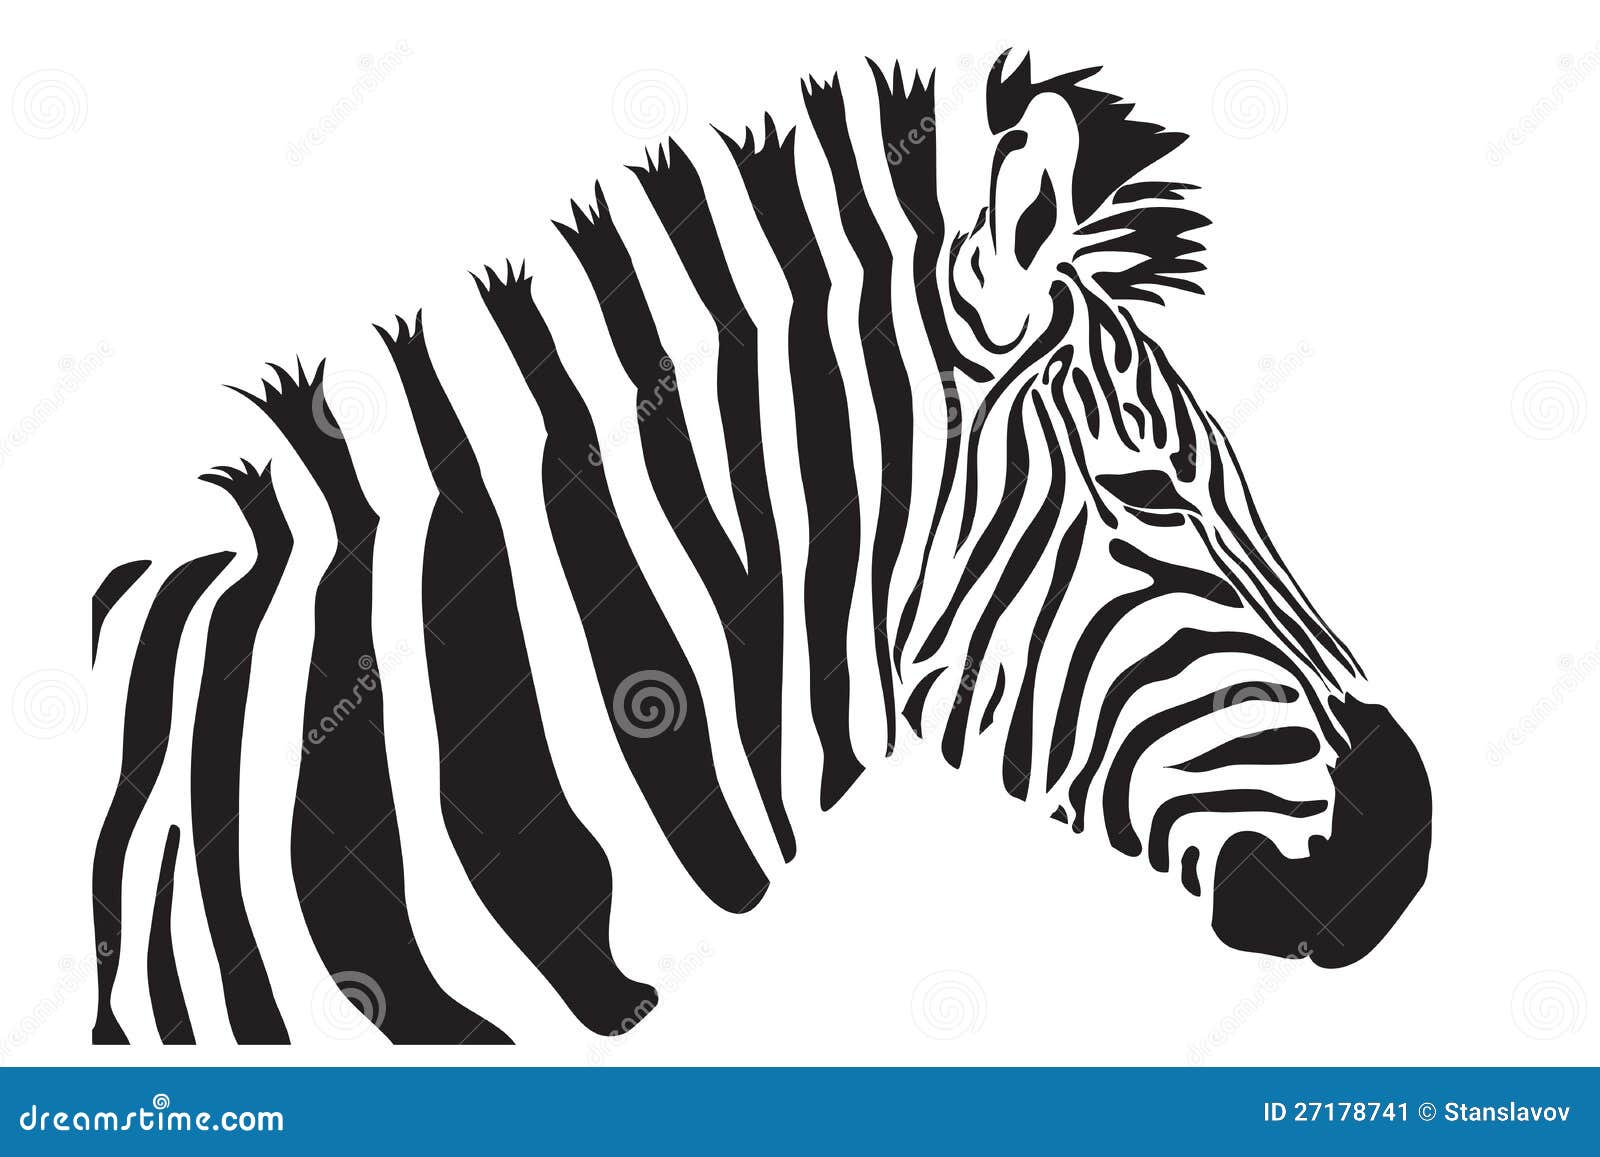 zebra outline clip art - photo #33